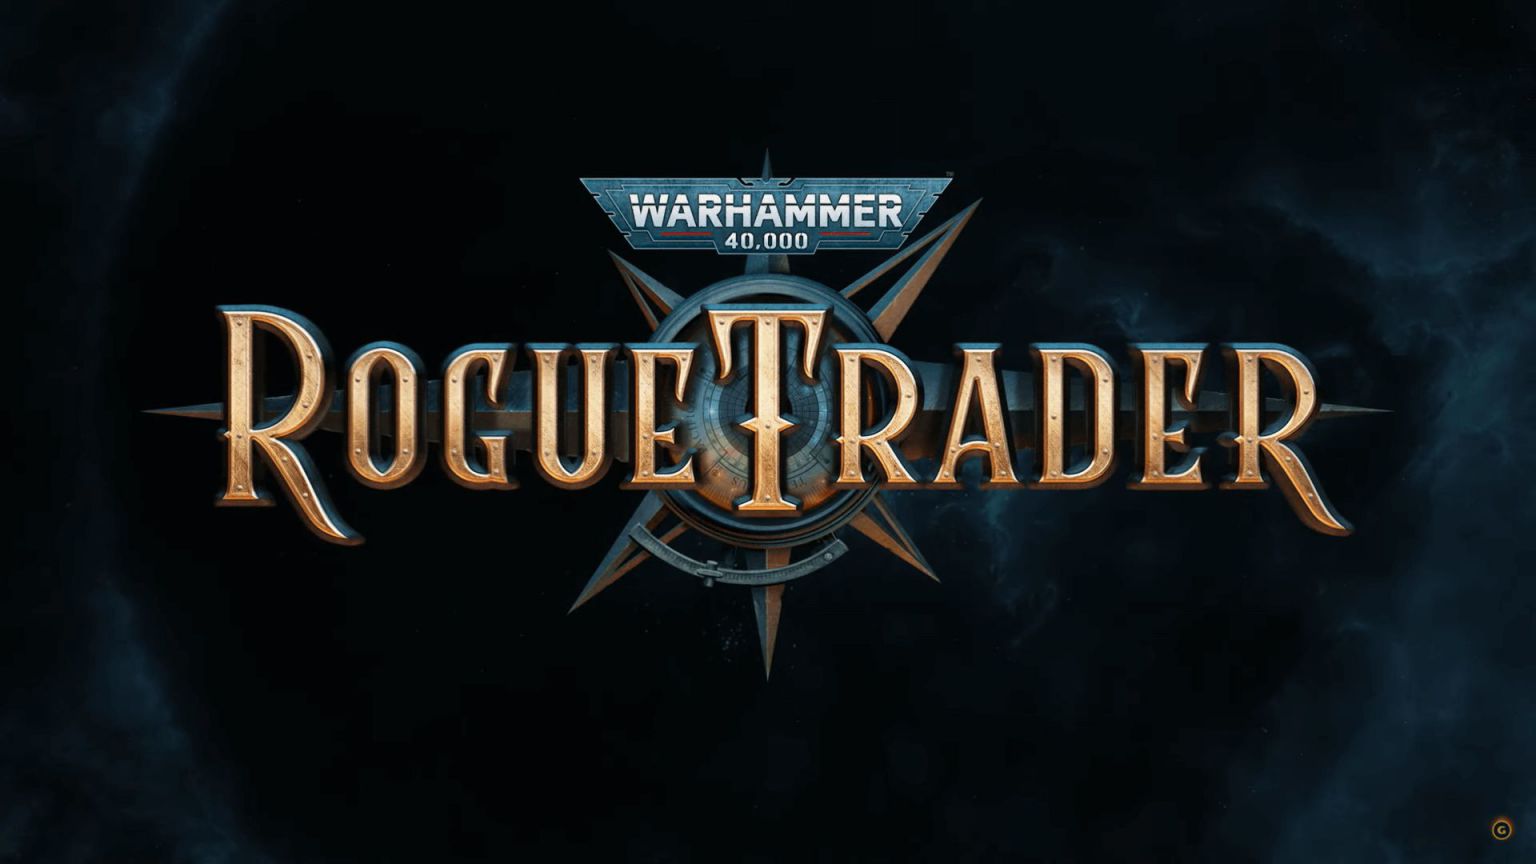 Warhammer 40,000 Rogue Trader